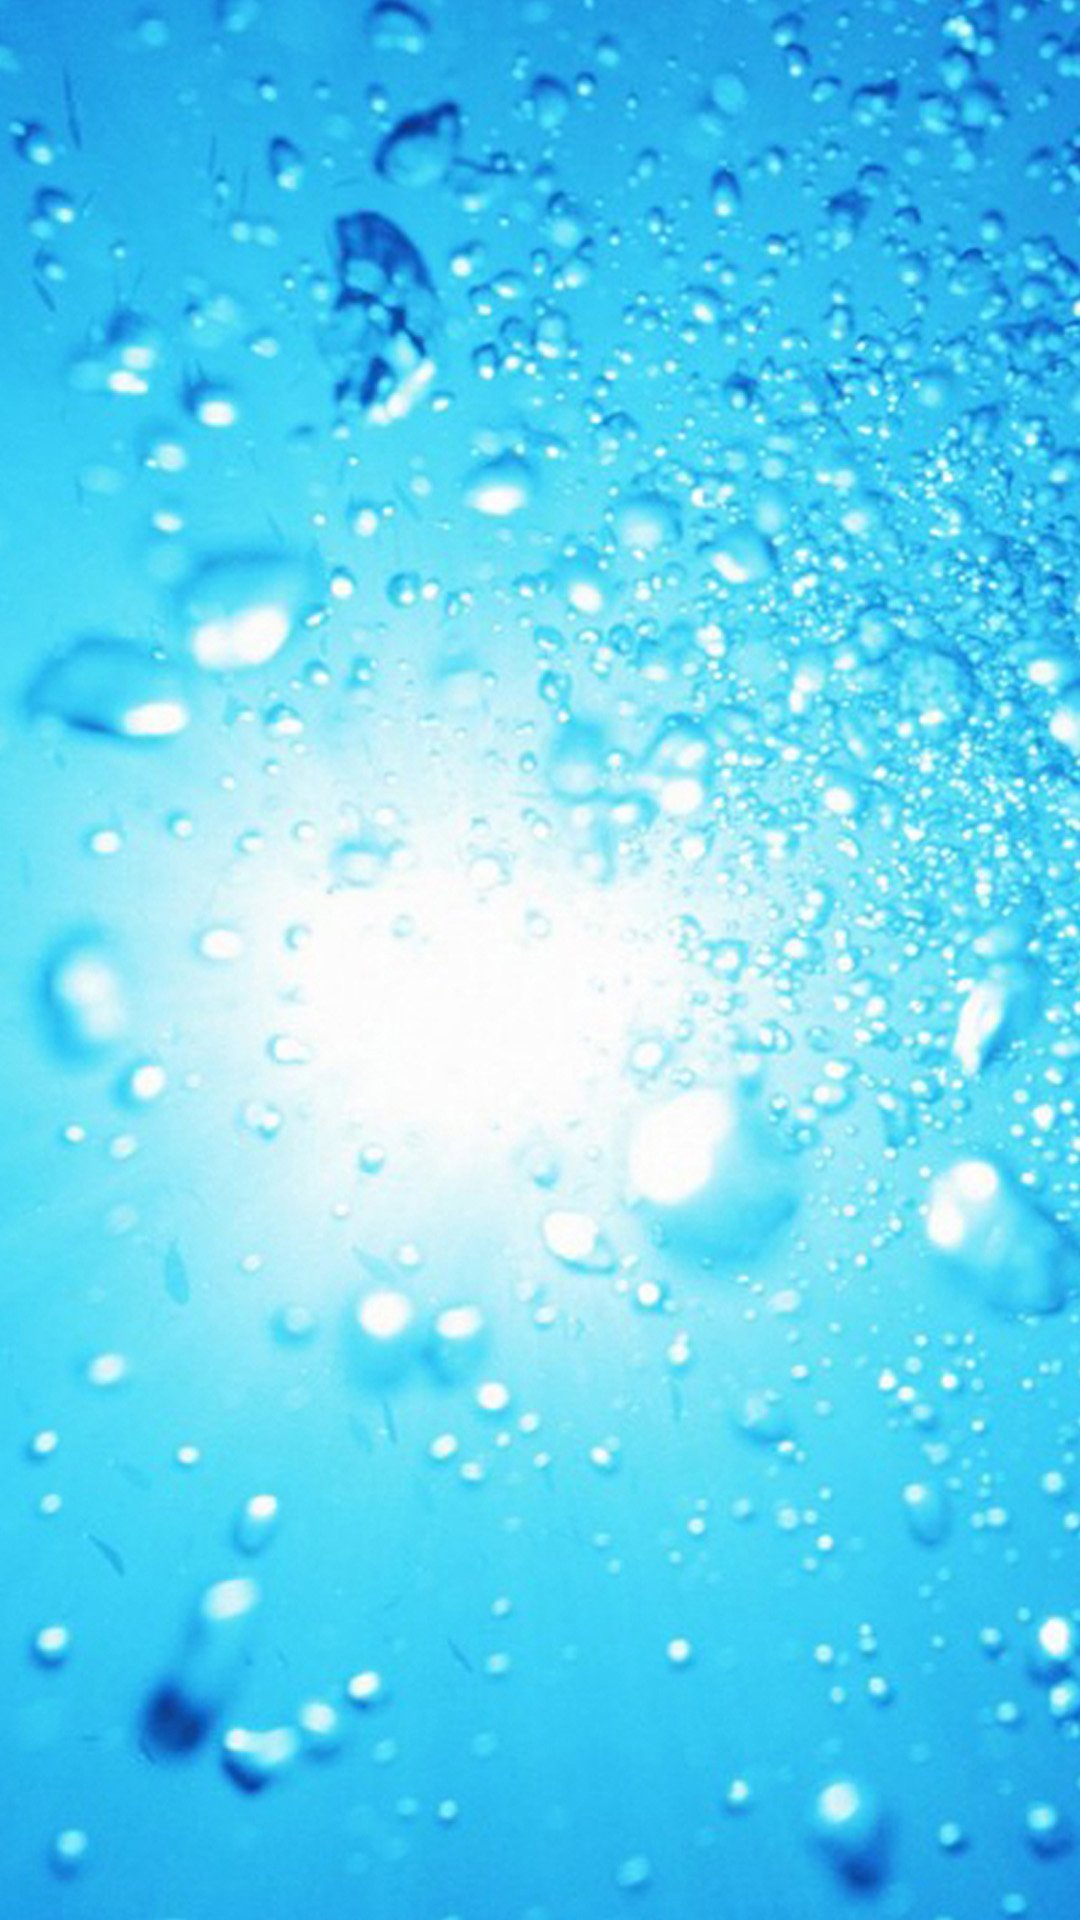 Blue Water Drops 8 S4 Wallpaper Samsung Galaxy S4 Wallpapers